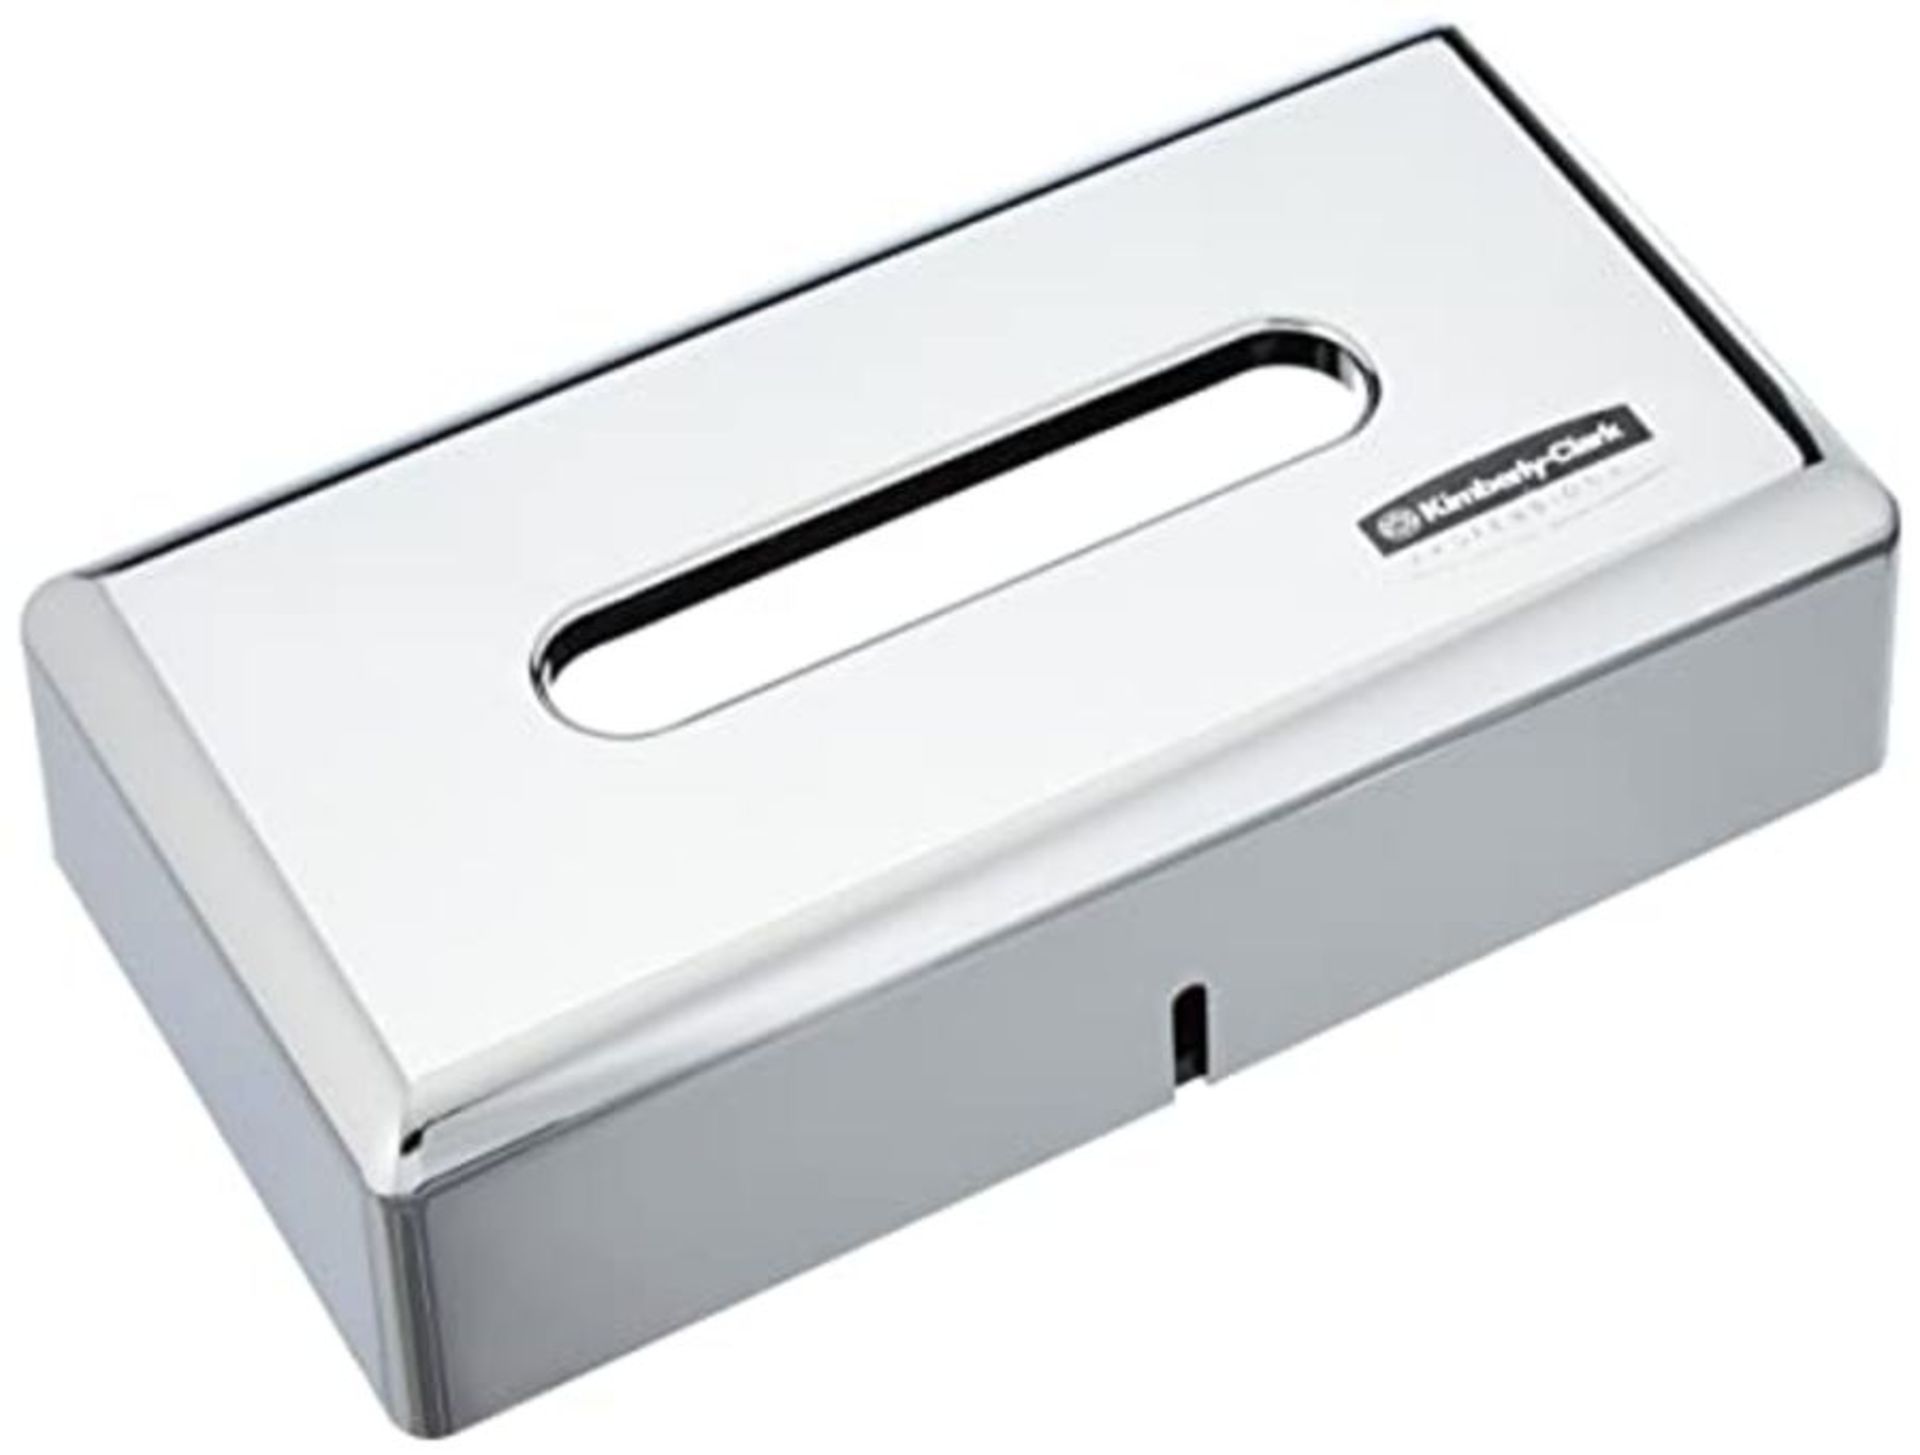 Kimberly-Clark Professional, 7820, Facial Tissue Dispenser, Silver, 1 x 1 Dispenser